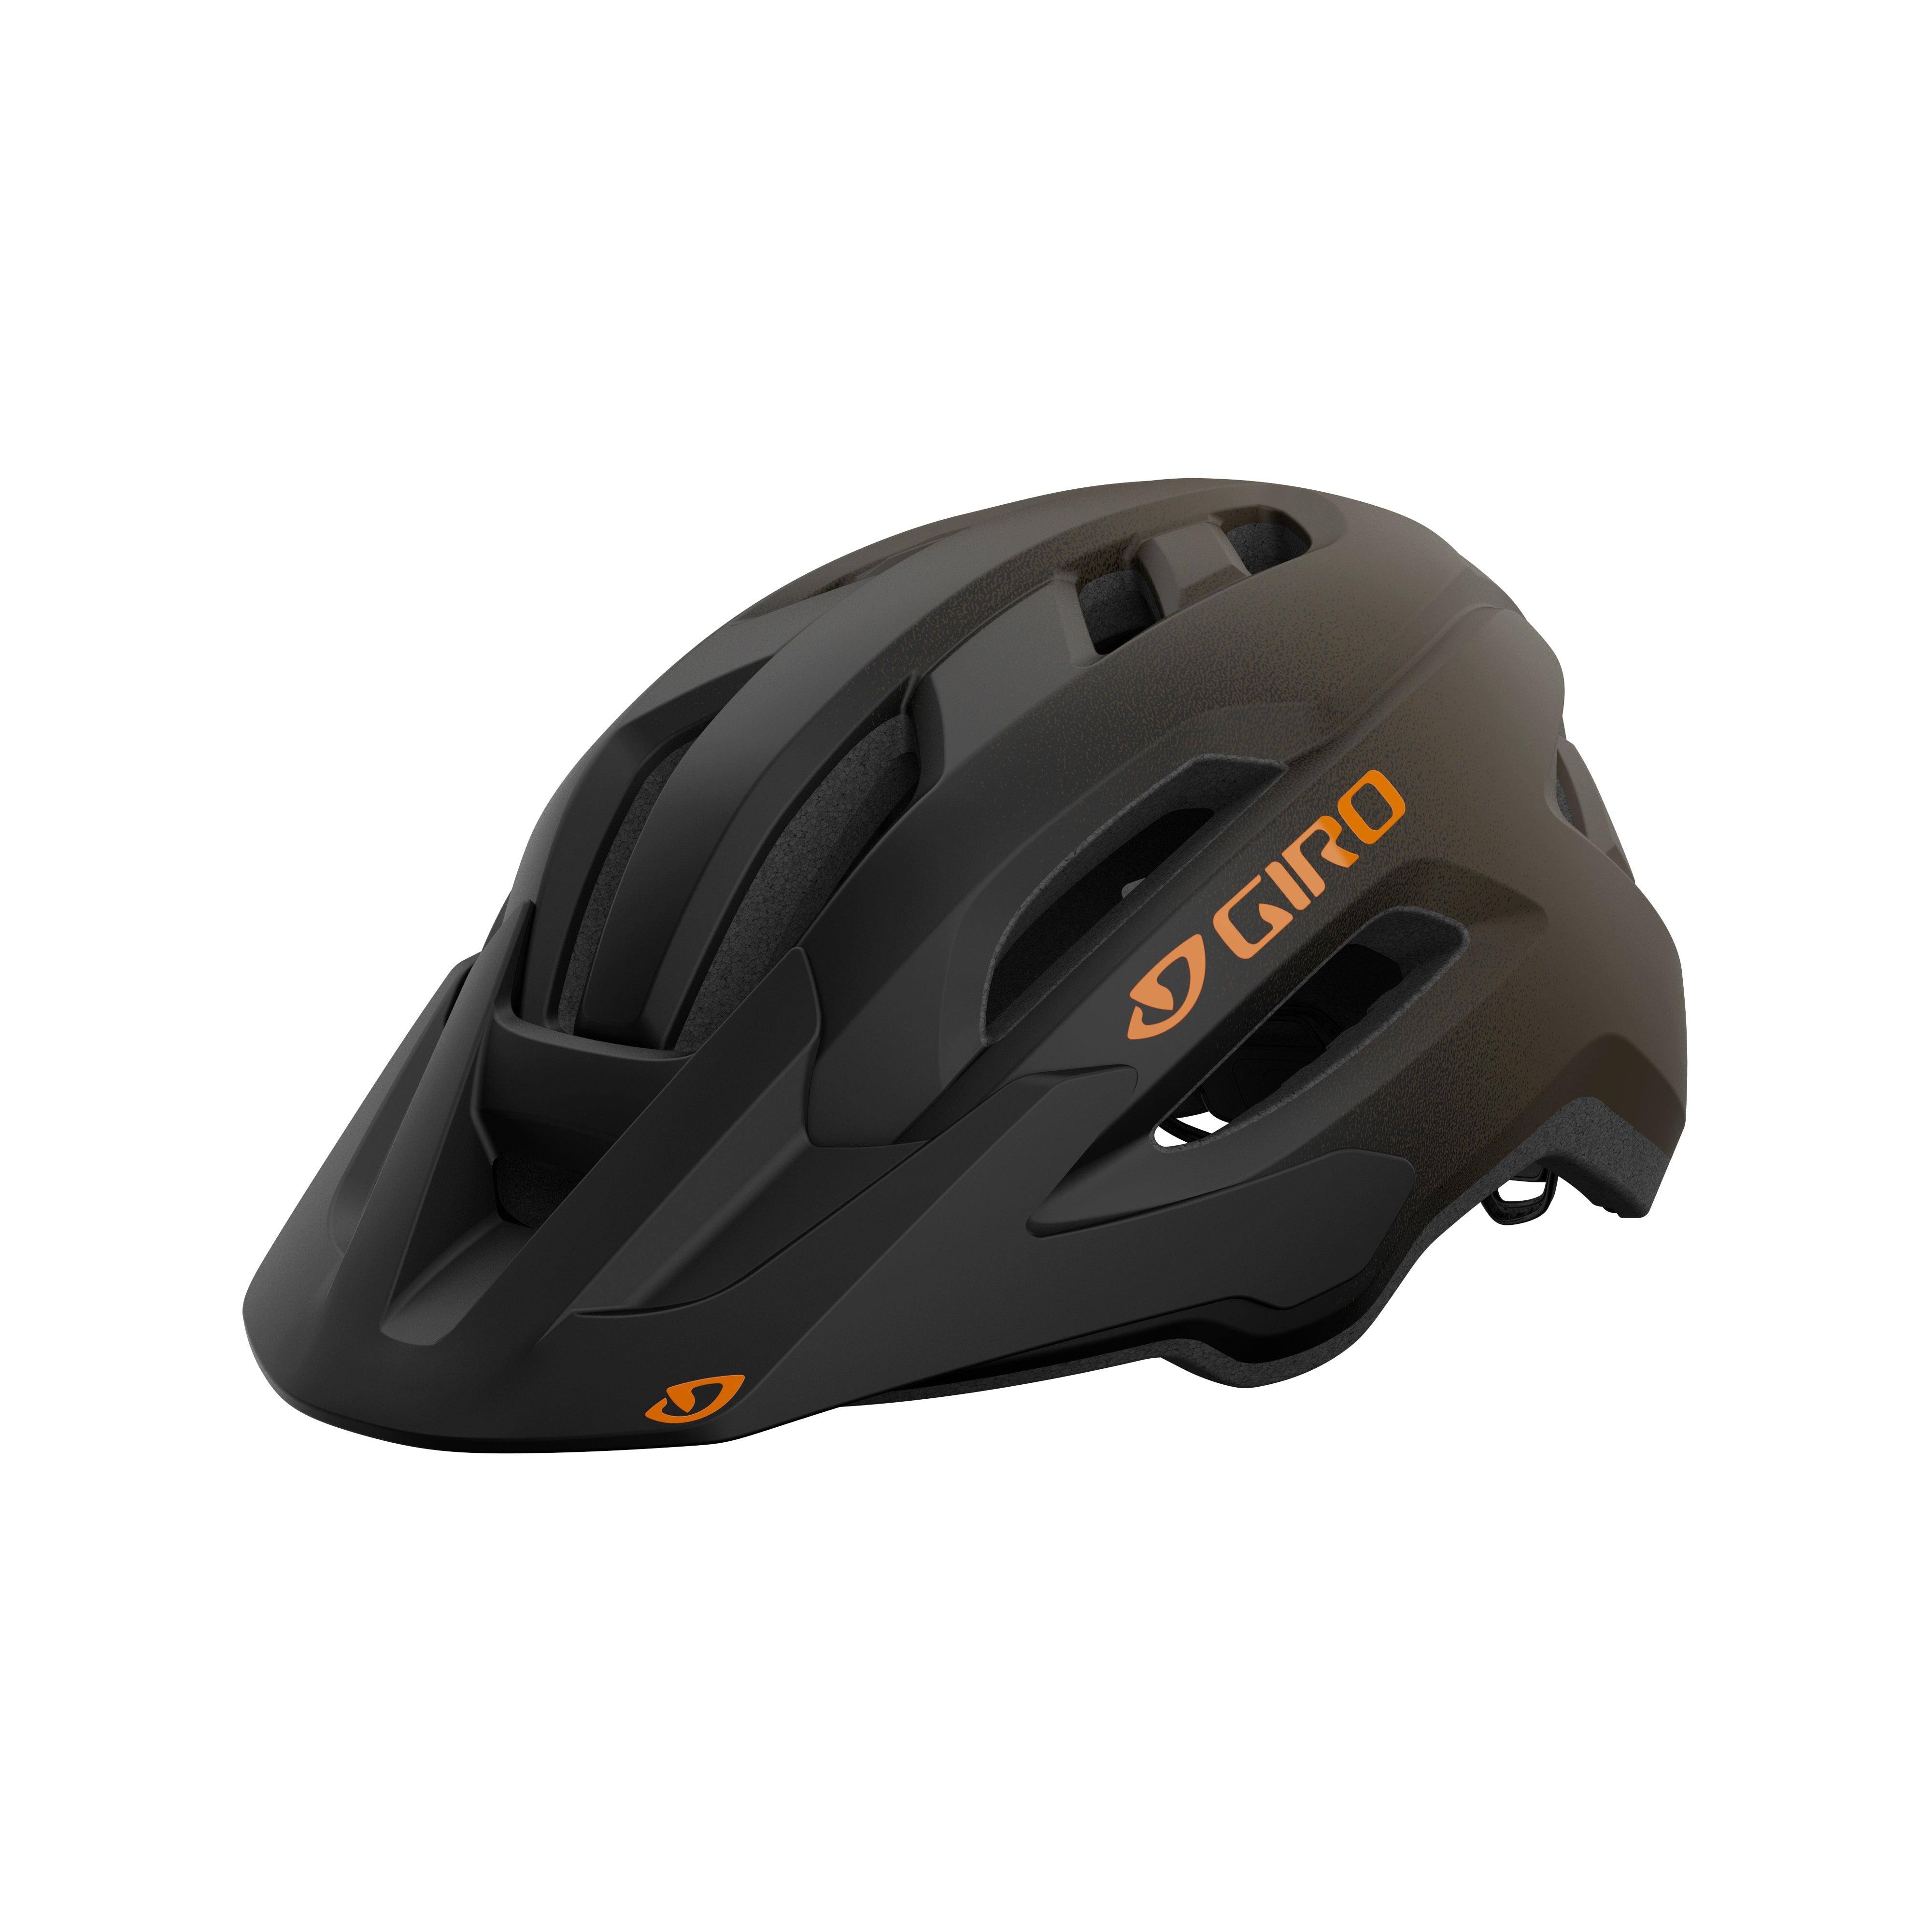 Giro Fixture 2 MIPS Helmet's Breezy Ventilation Roc Loc Sport With EPS Liner, Trail Green / Universal Adult